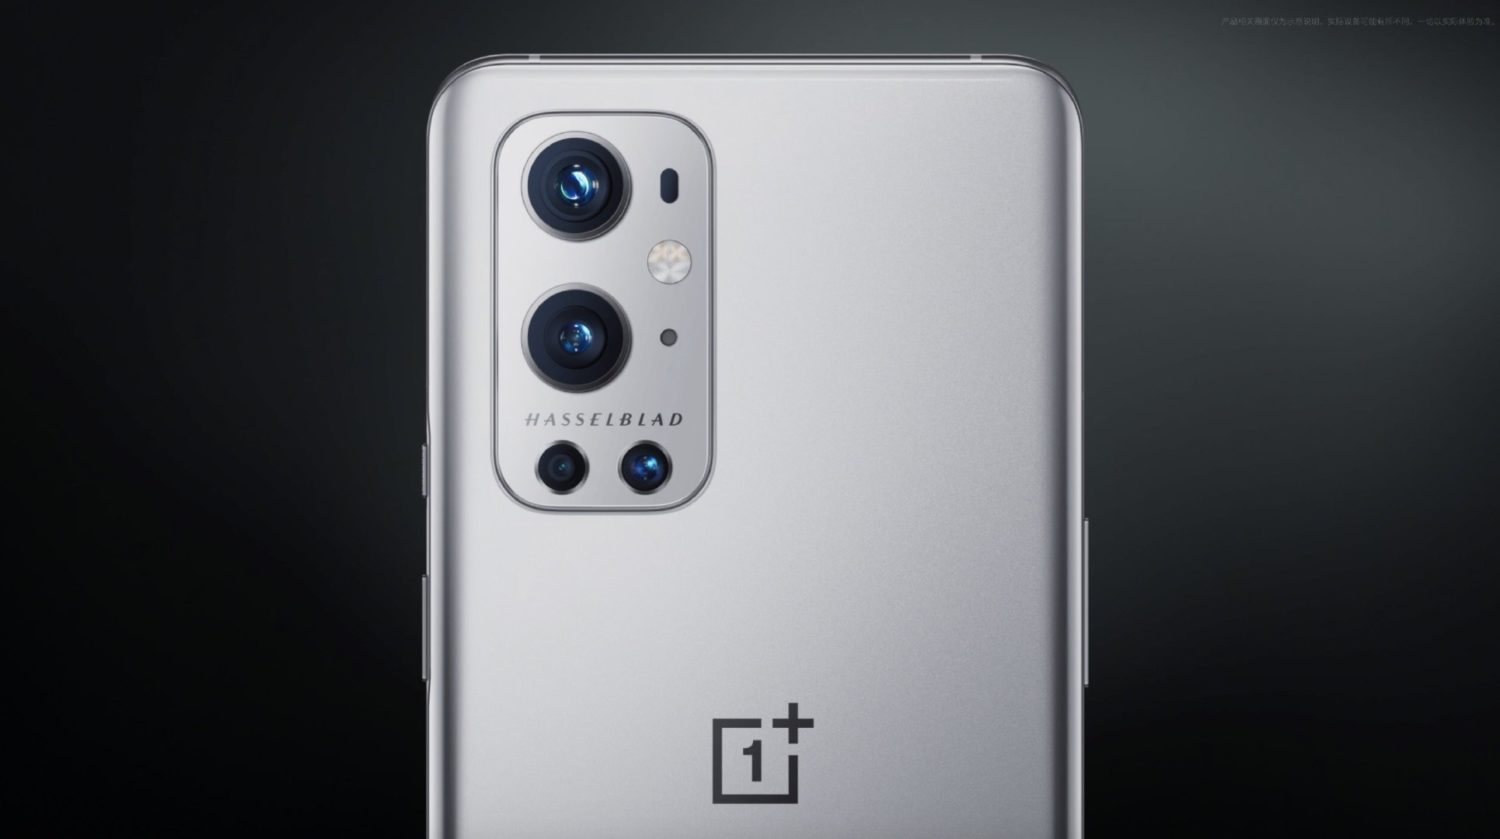 OnePlus 9 Series Image